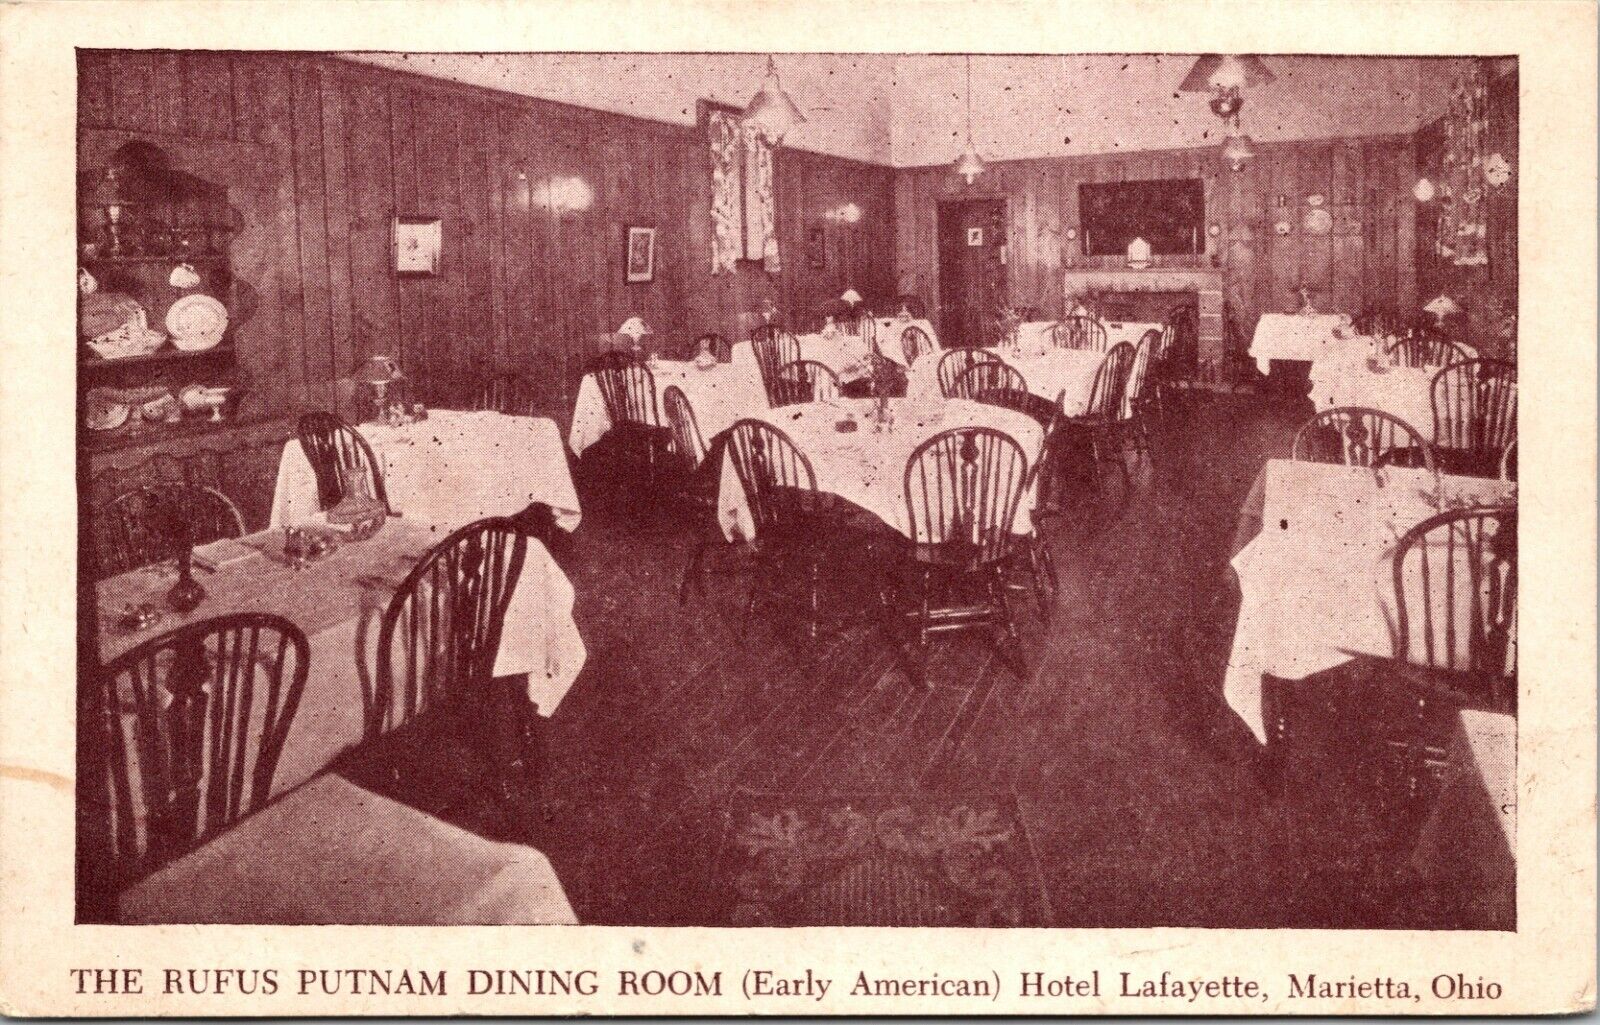 Marietta Ohio OH Rufus Putnam Dining Room, Early American Hotel LaFayette